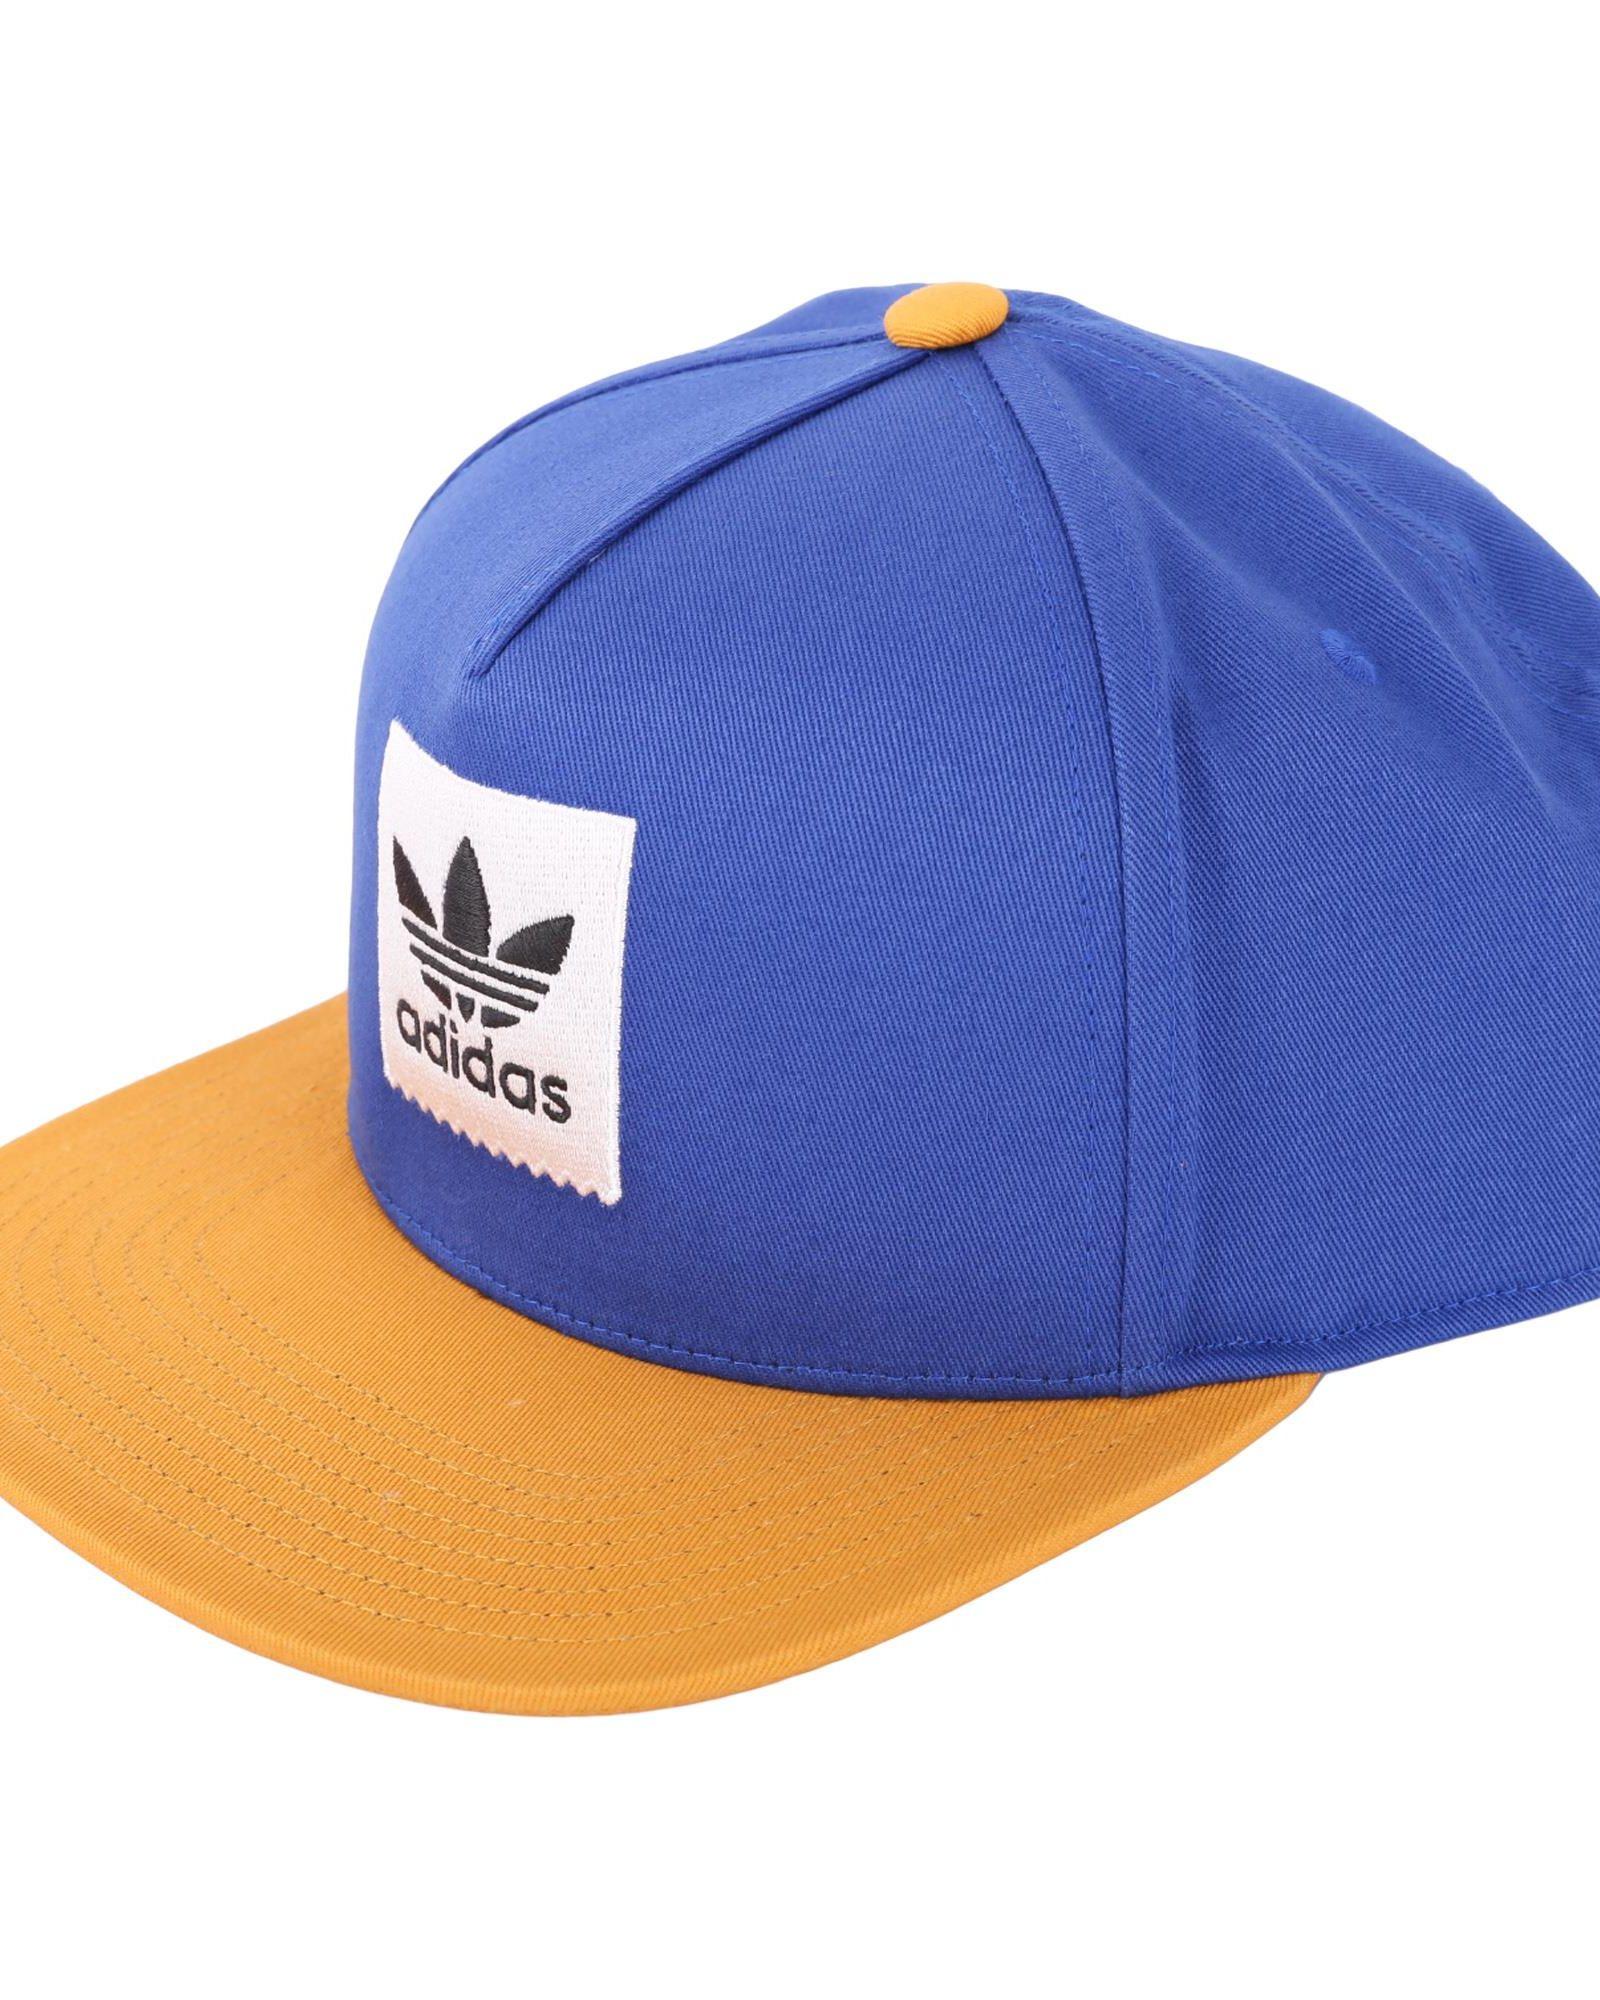 Adidas Originals 2tone Snapback Hat In Blue - Yellow | ModeSens